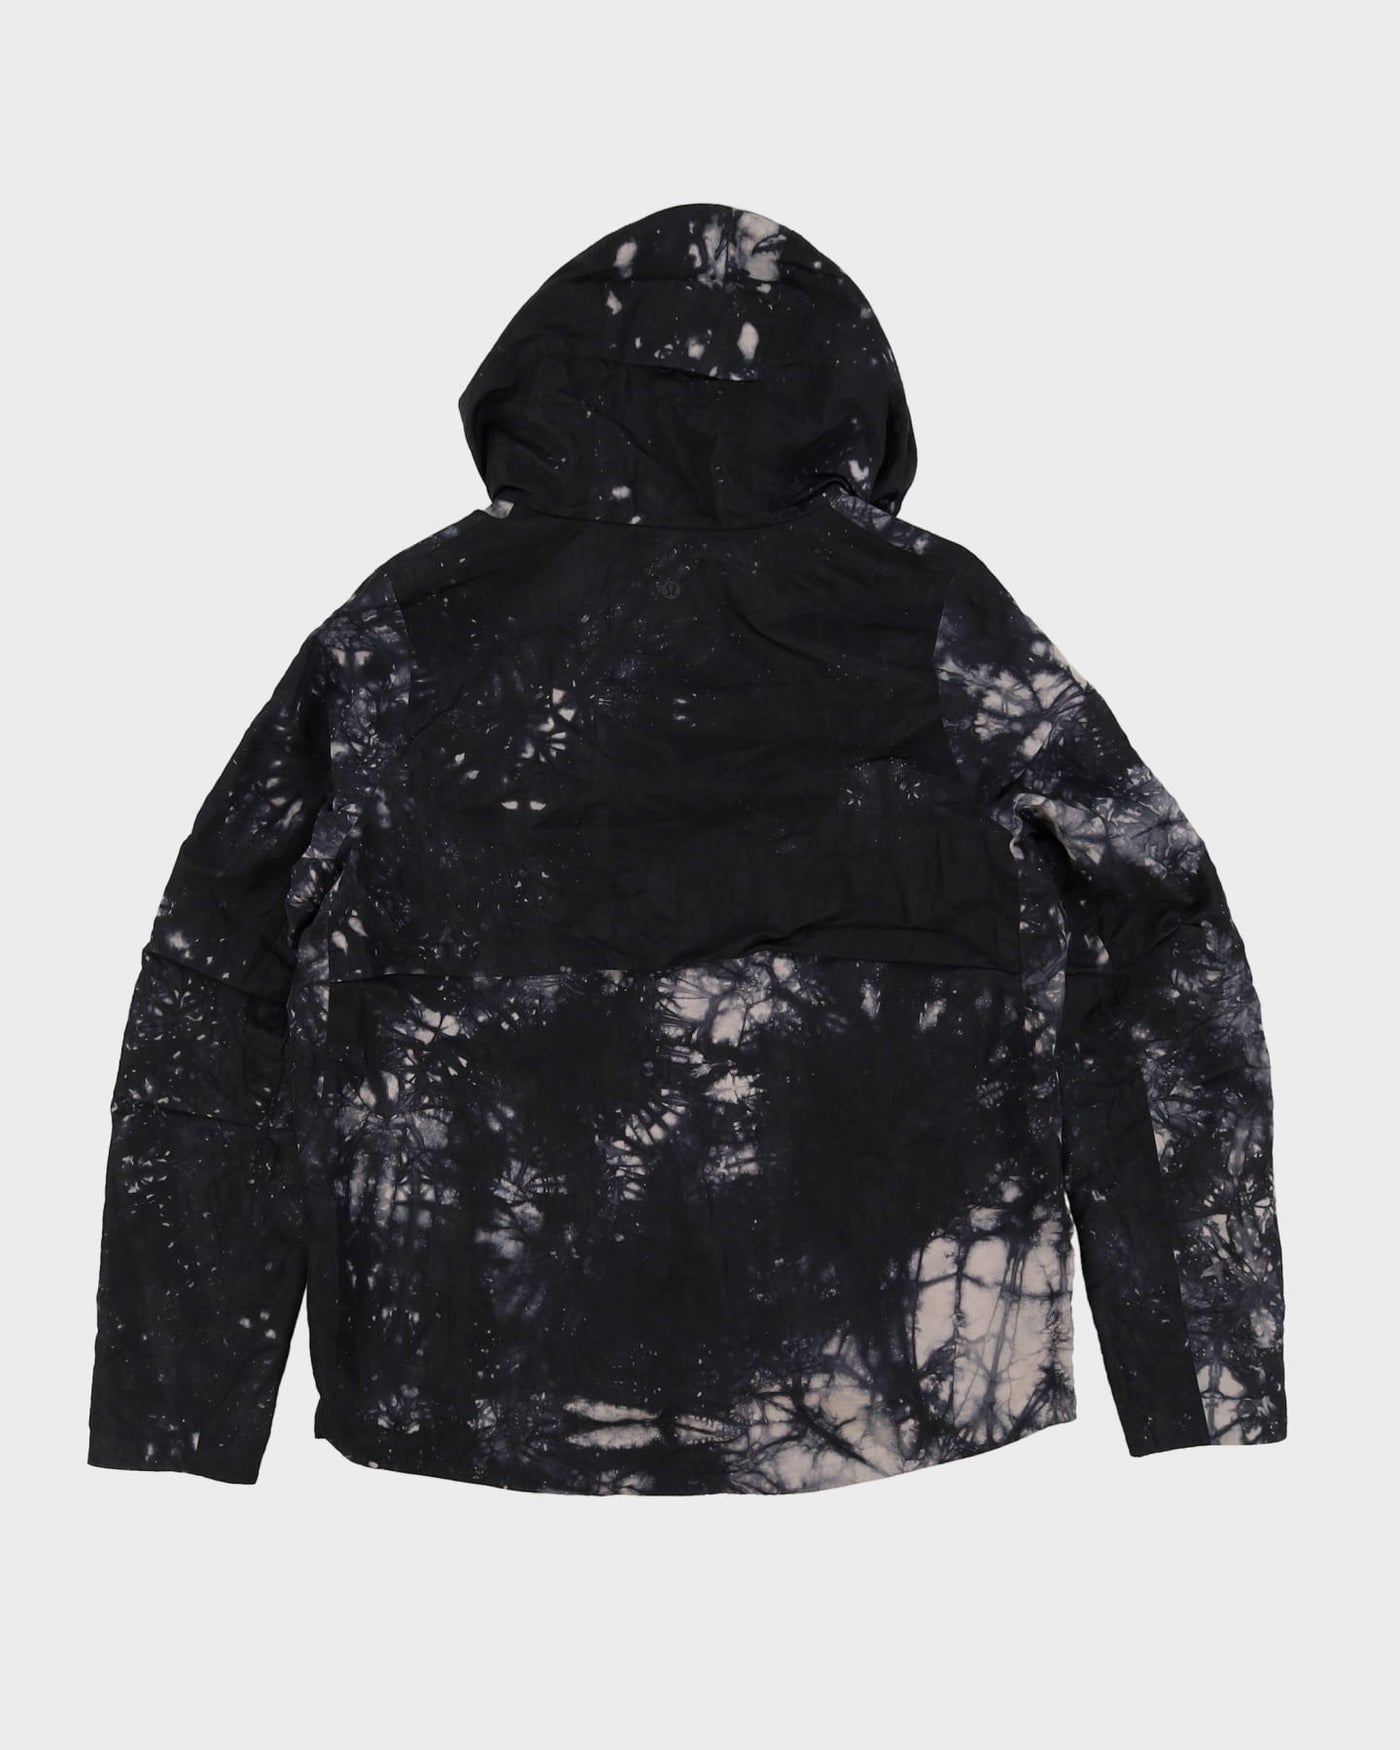 Lululemon Grey / Black Patterned Hooded Anorak Rain Jacket - M / L